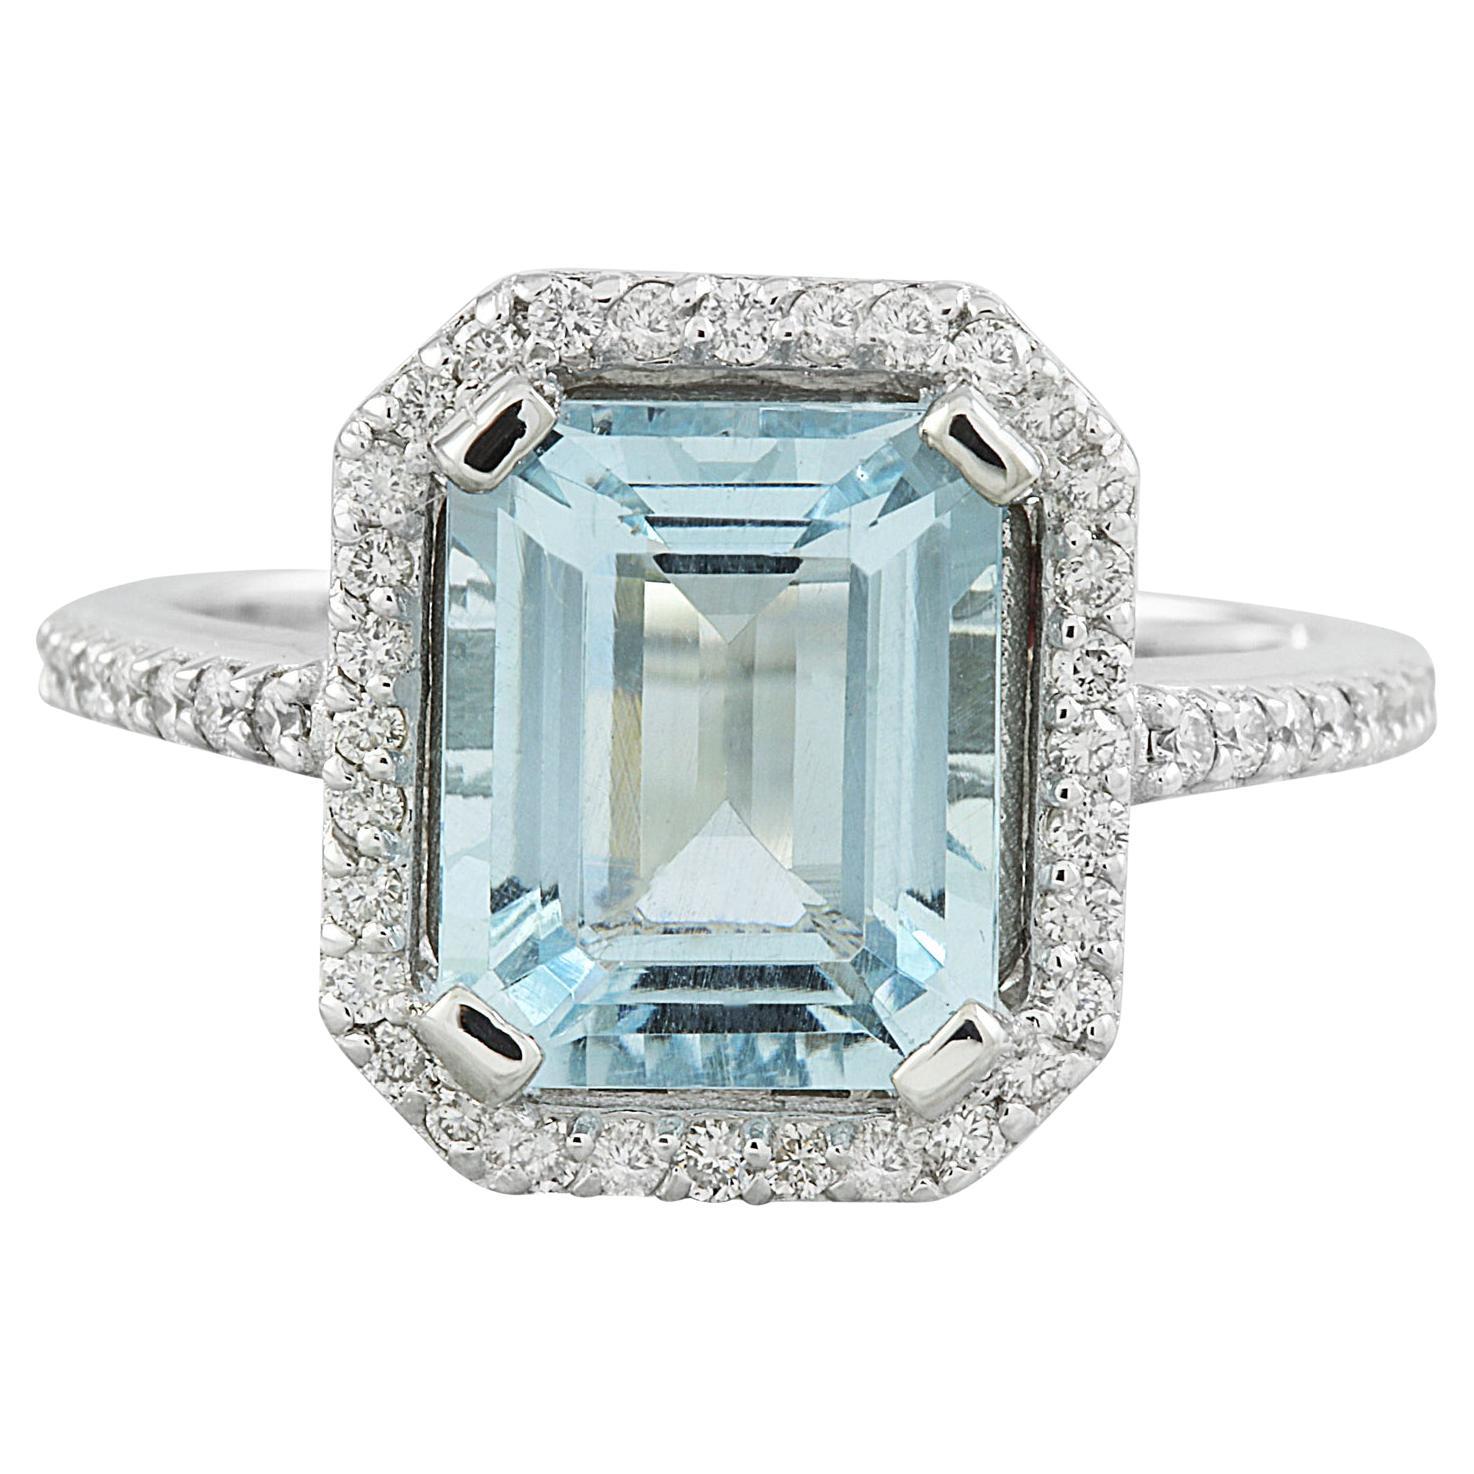 Aquamarine Brilliance: Emerald Cut Diamond Ring in 14K Solid White Gold